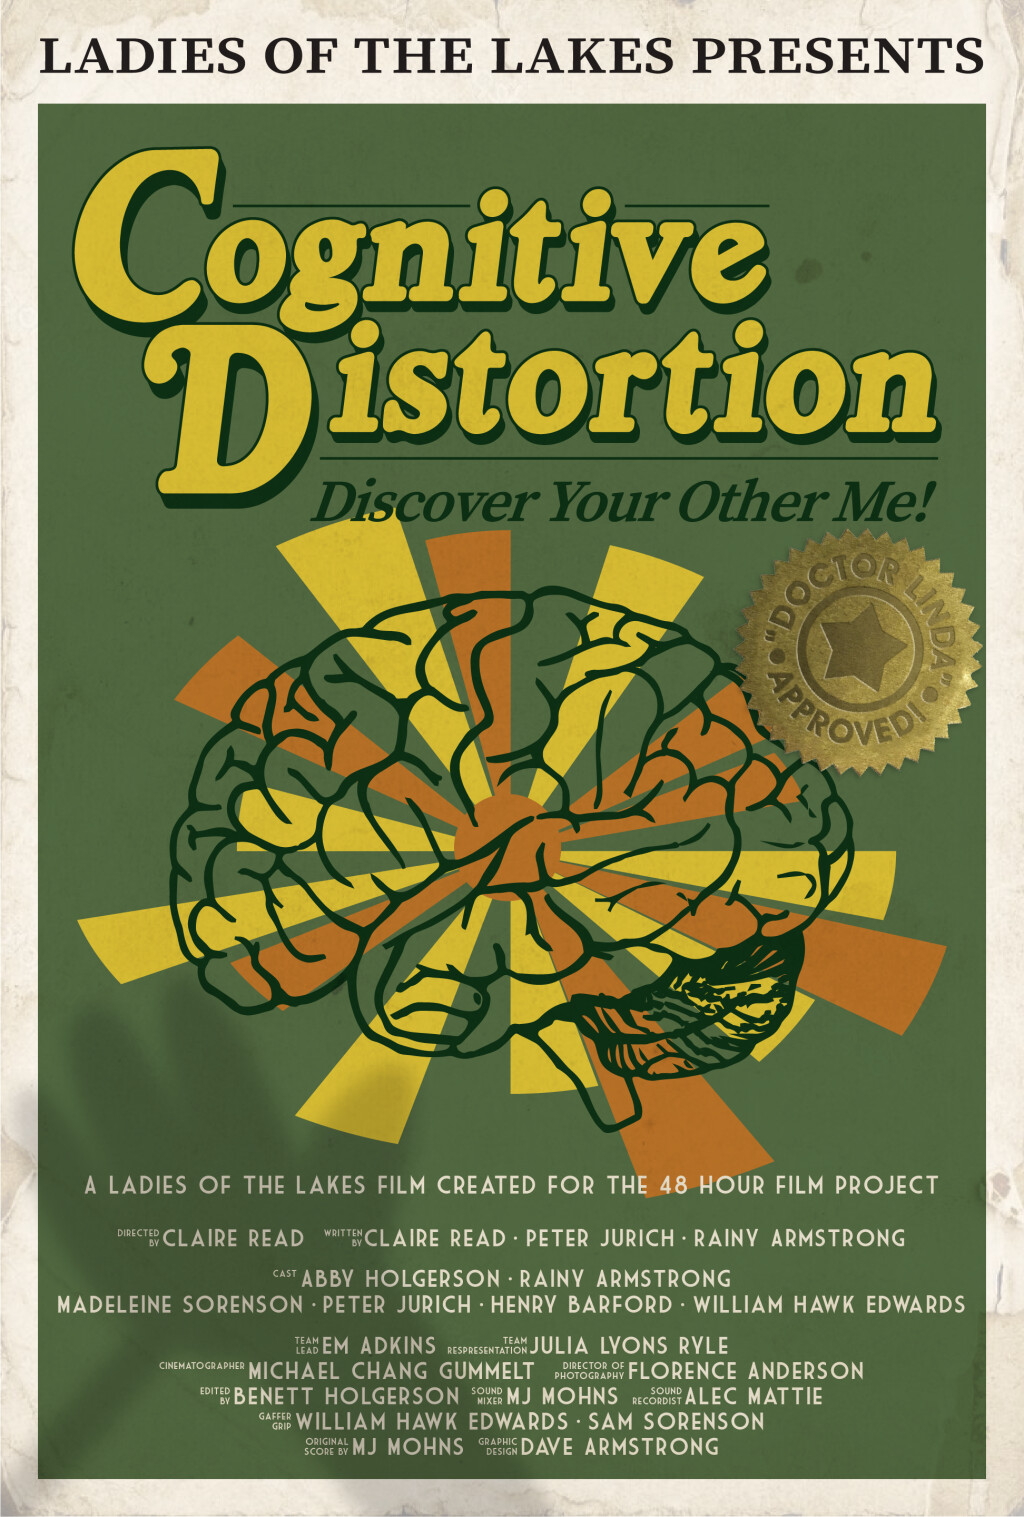 Filmposter for Cognitive Distortion